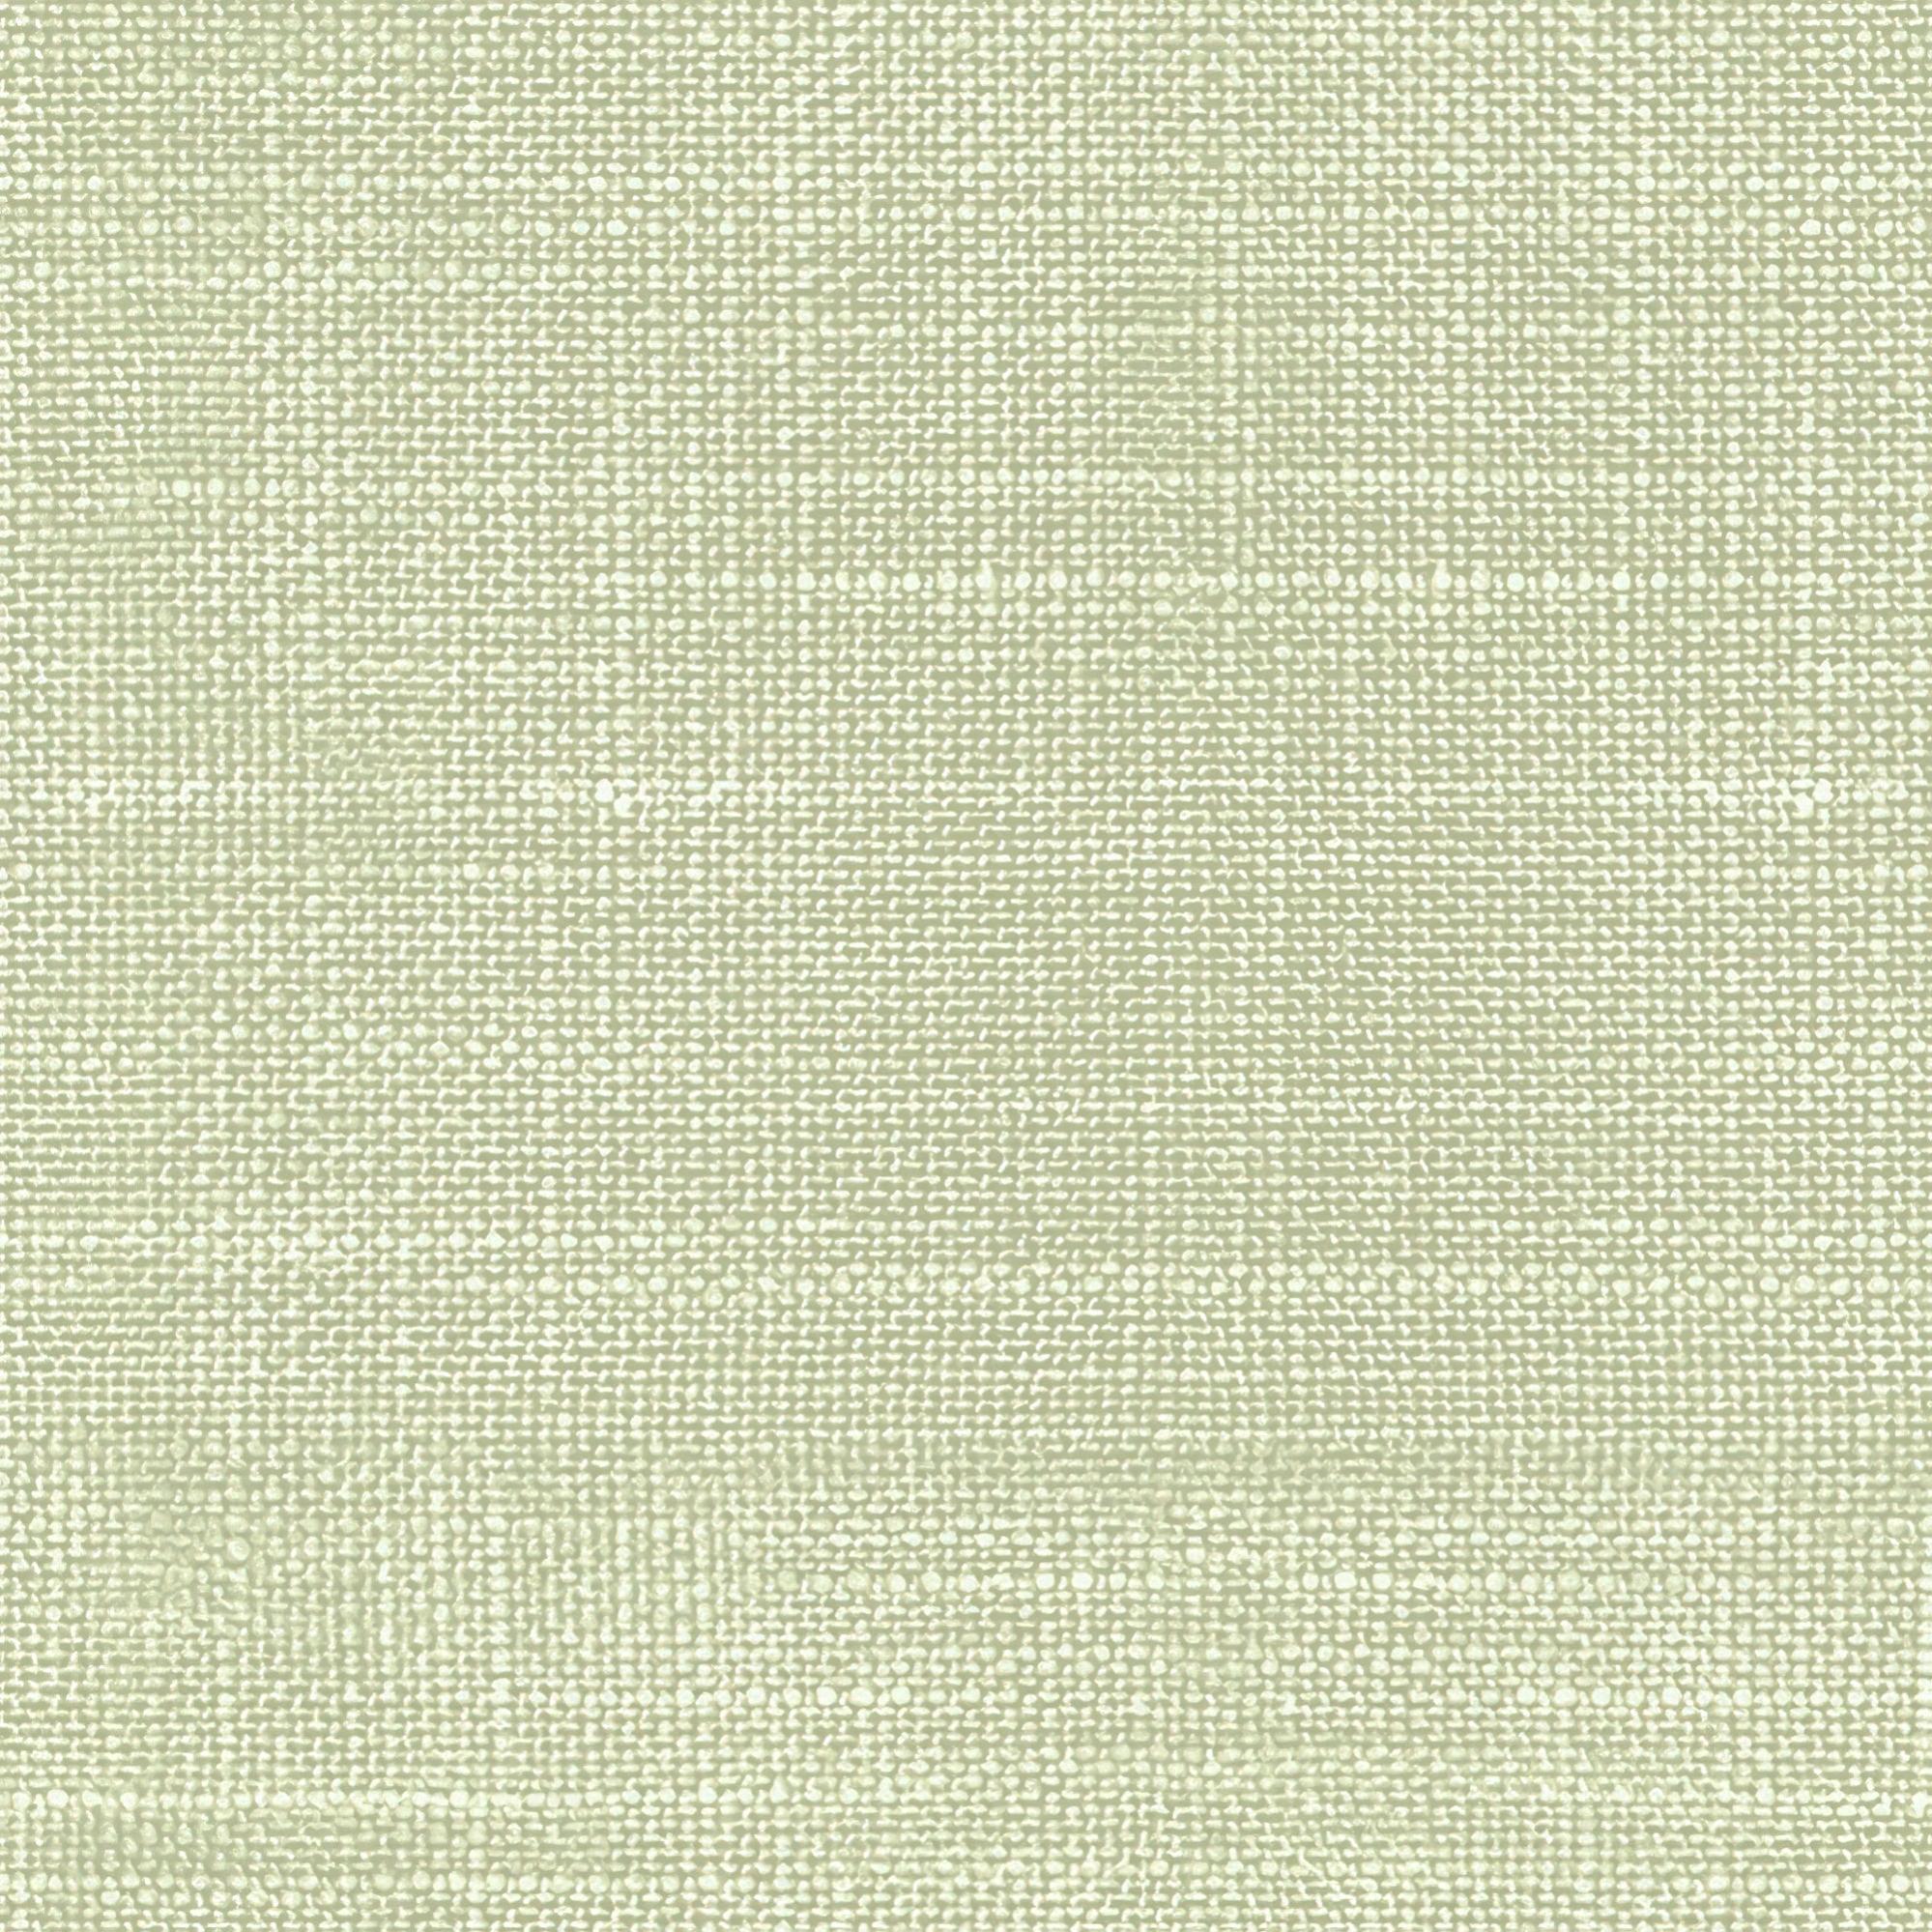 Tela al corte tapicería jacquard rennes verde ancho 140 cm